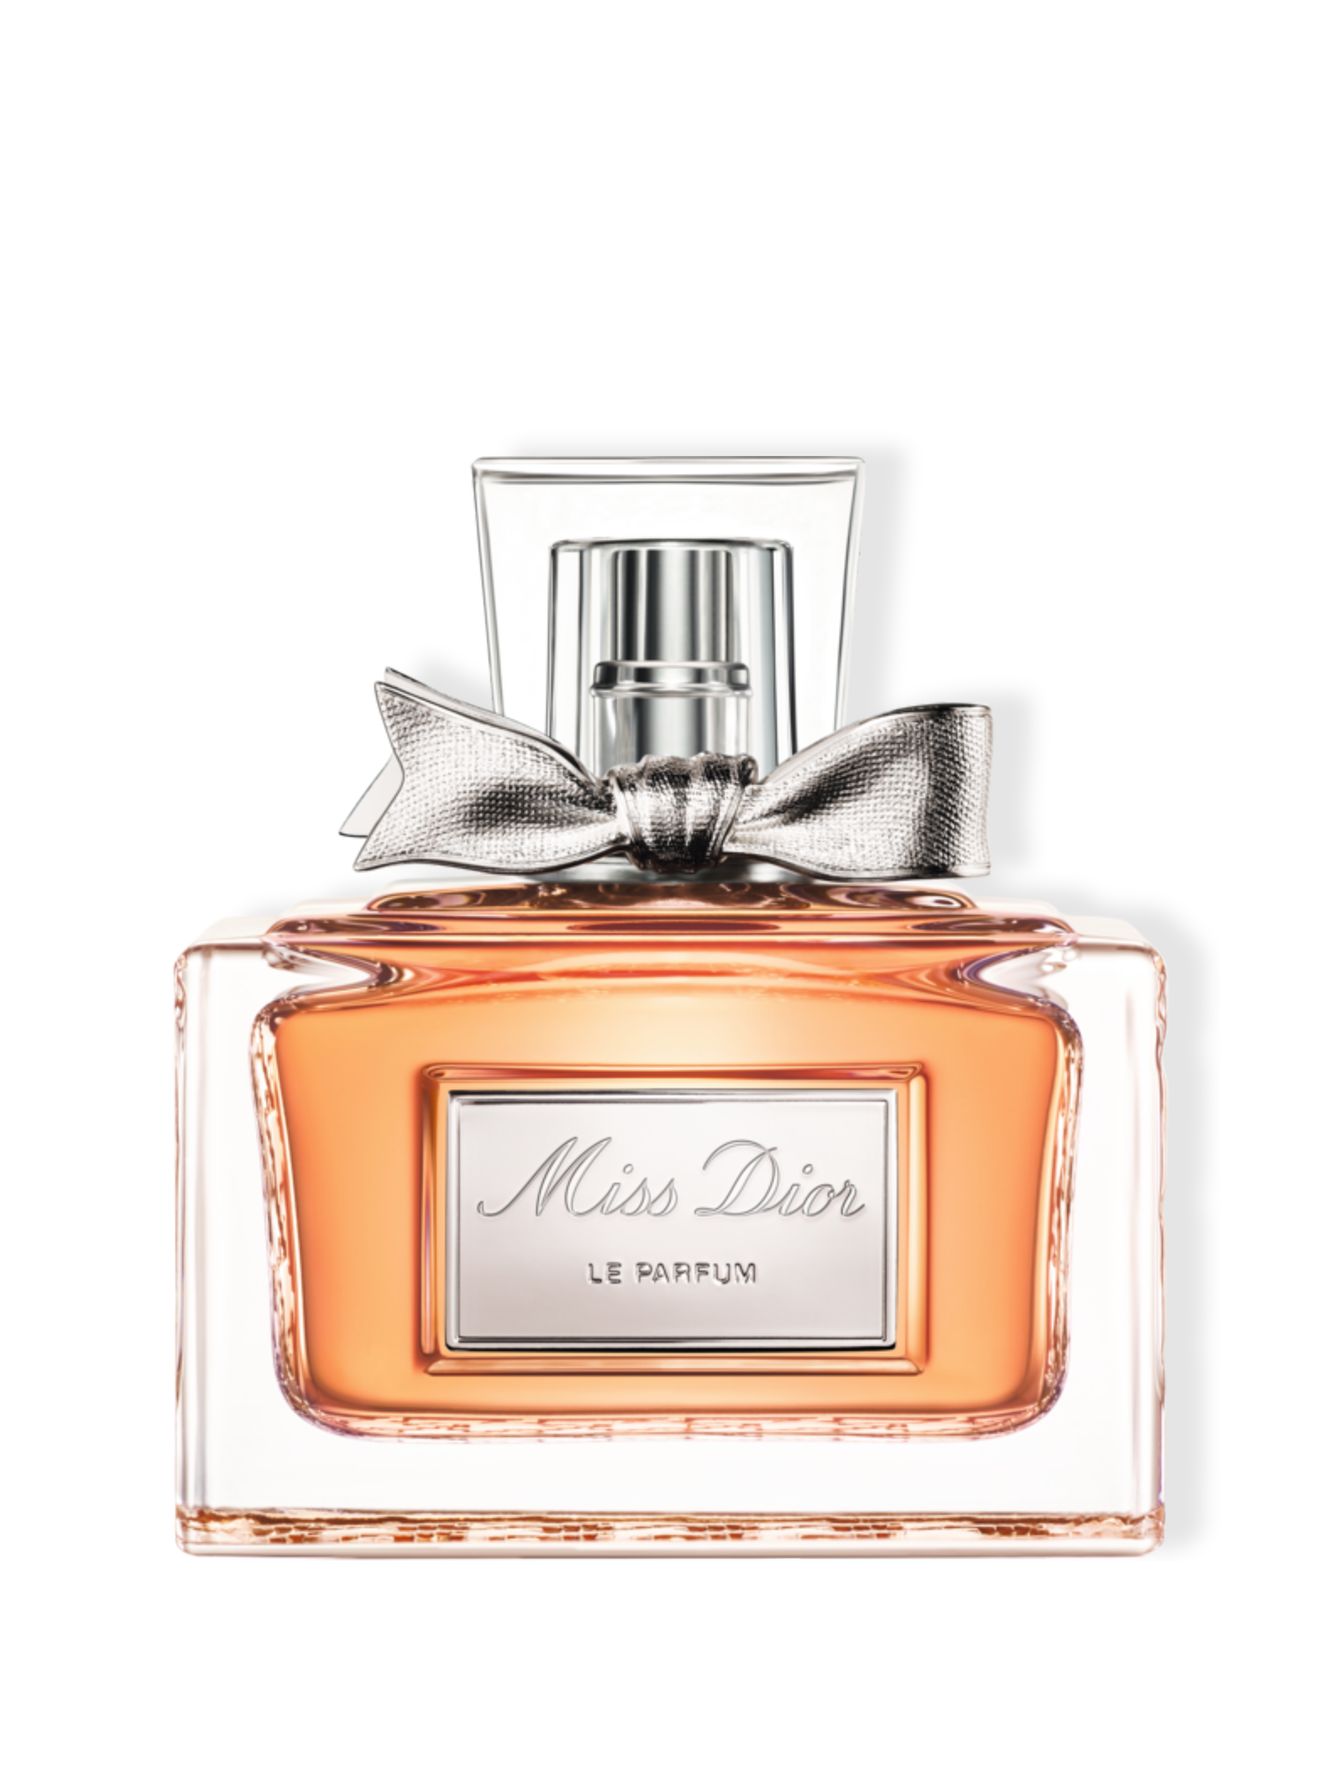 Miss Dior Le Parfum 75 мл - Общий вид